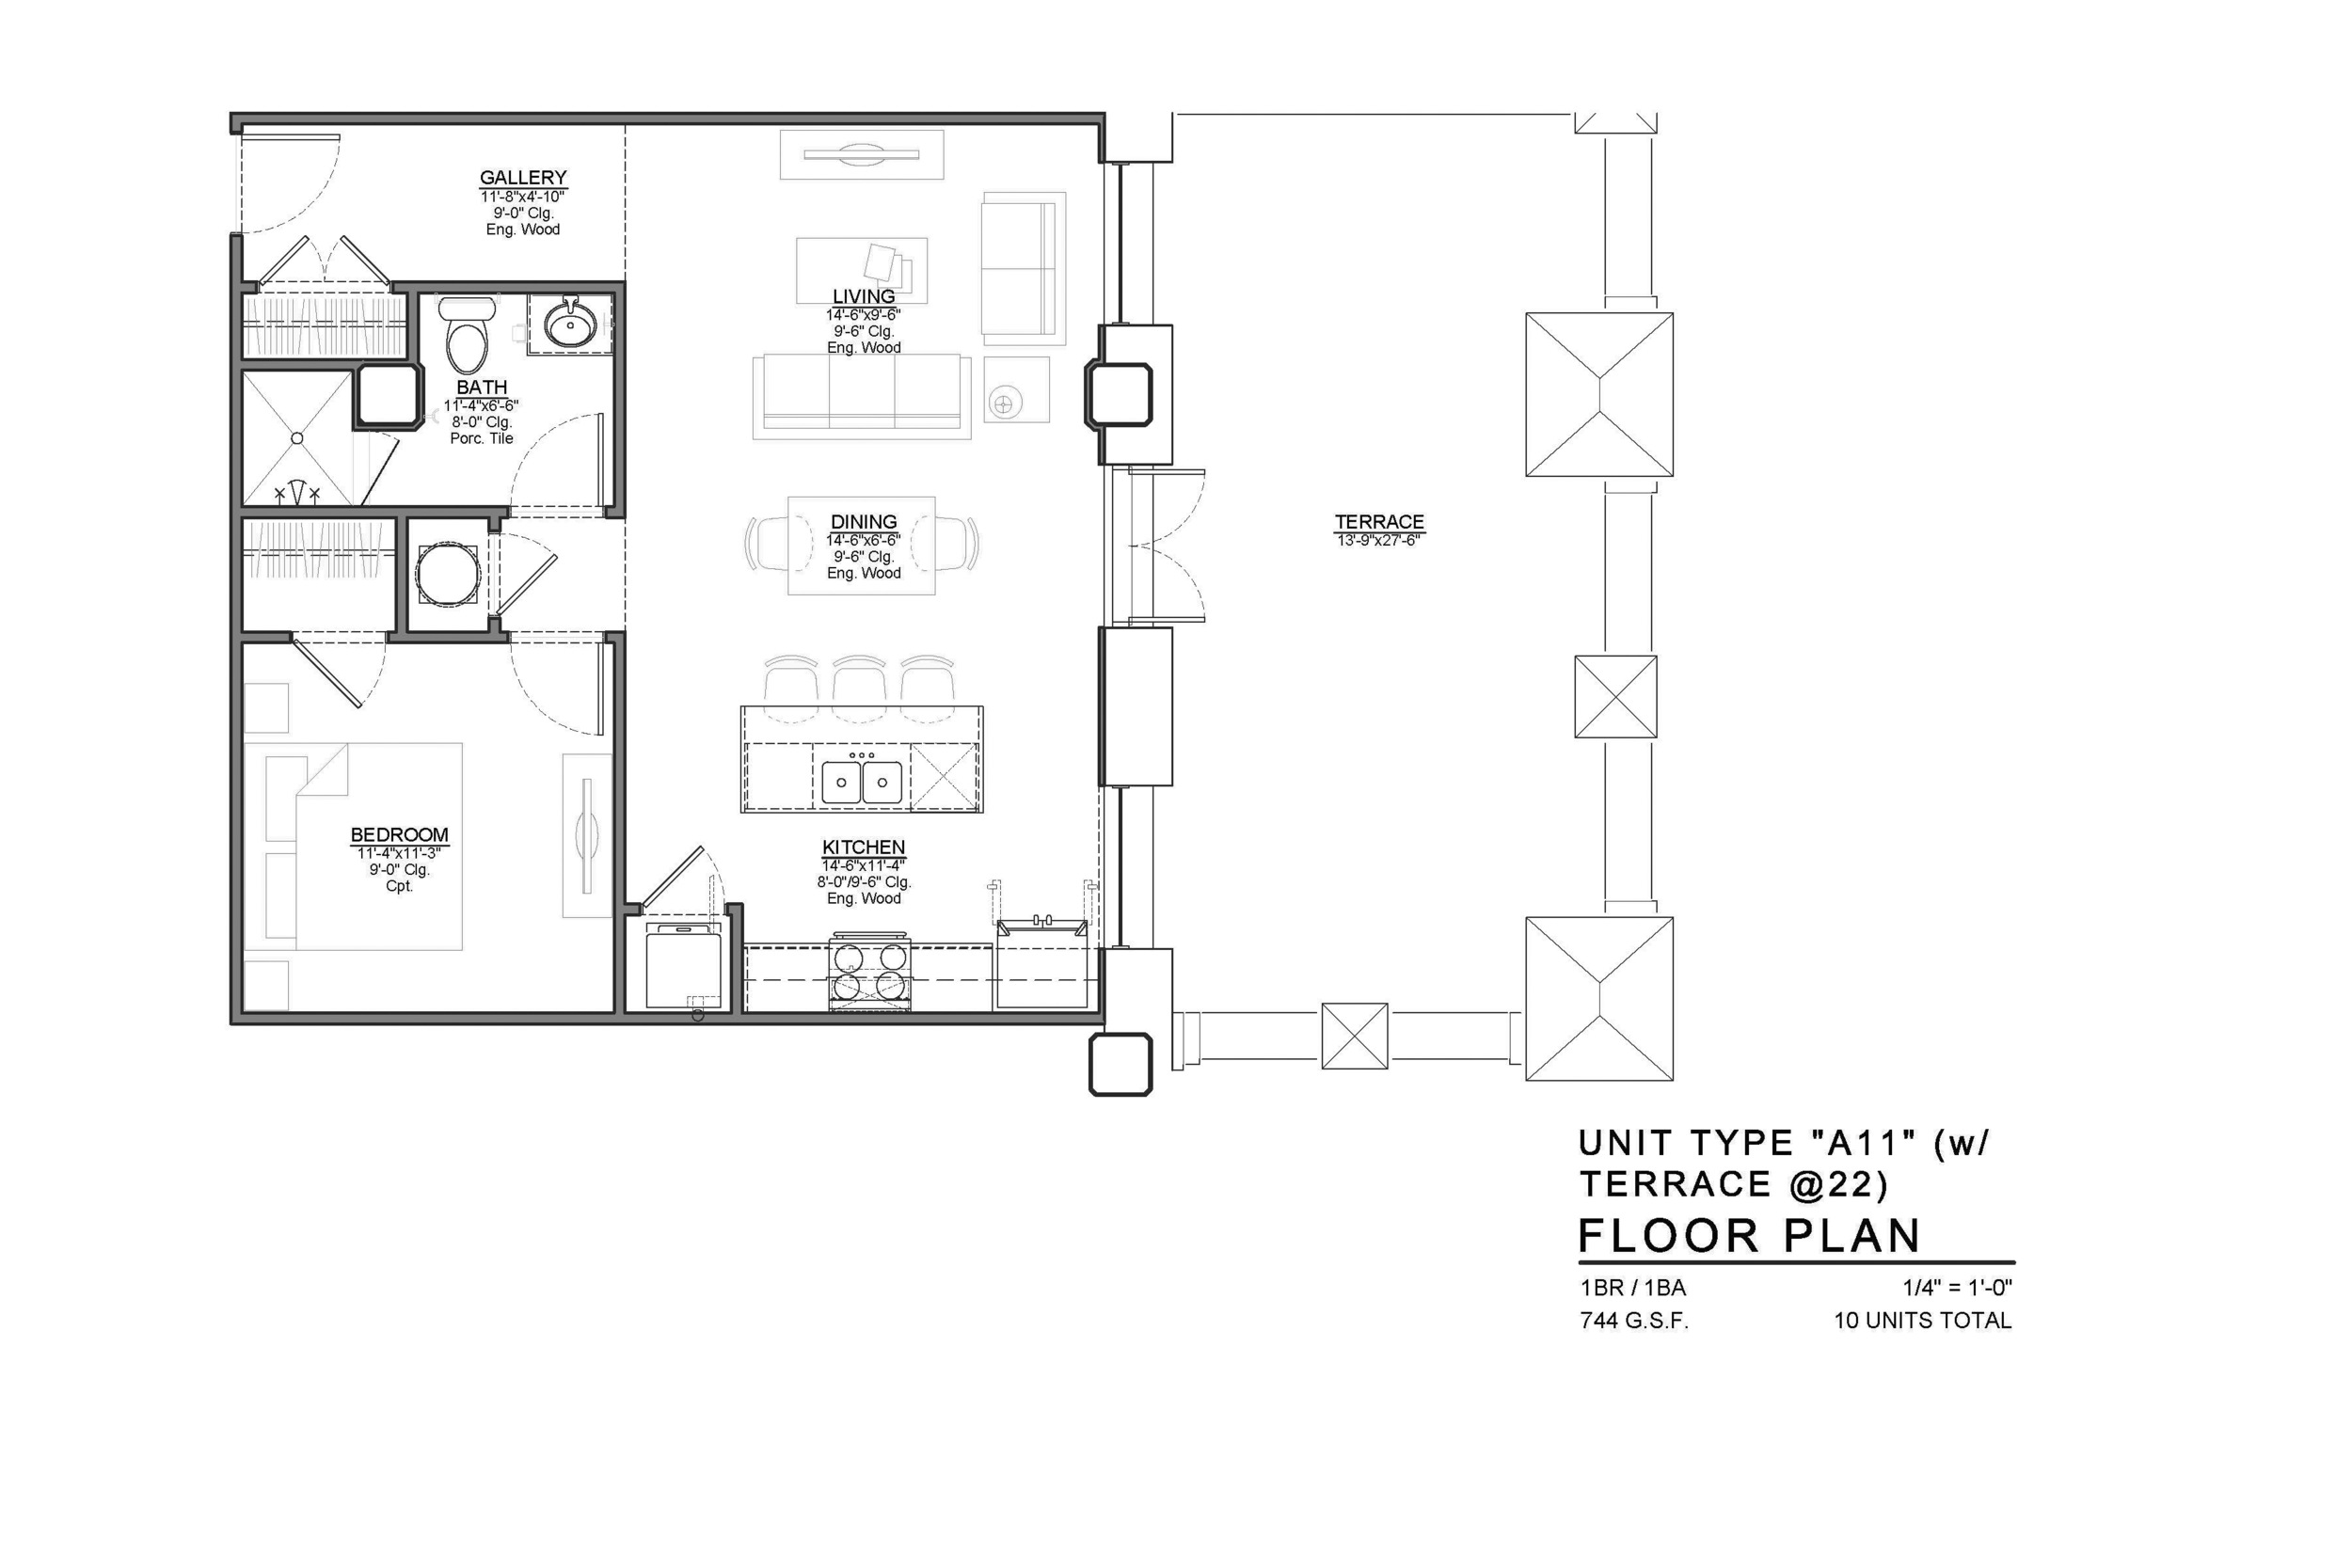 A11 FLOOR PLAN: 1 BEDROOM / 1 BATH